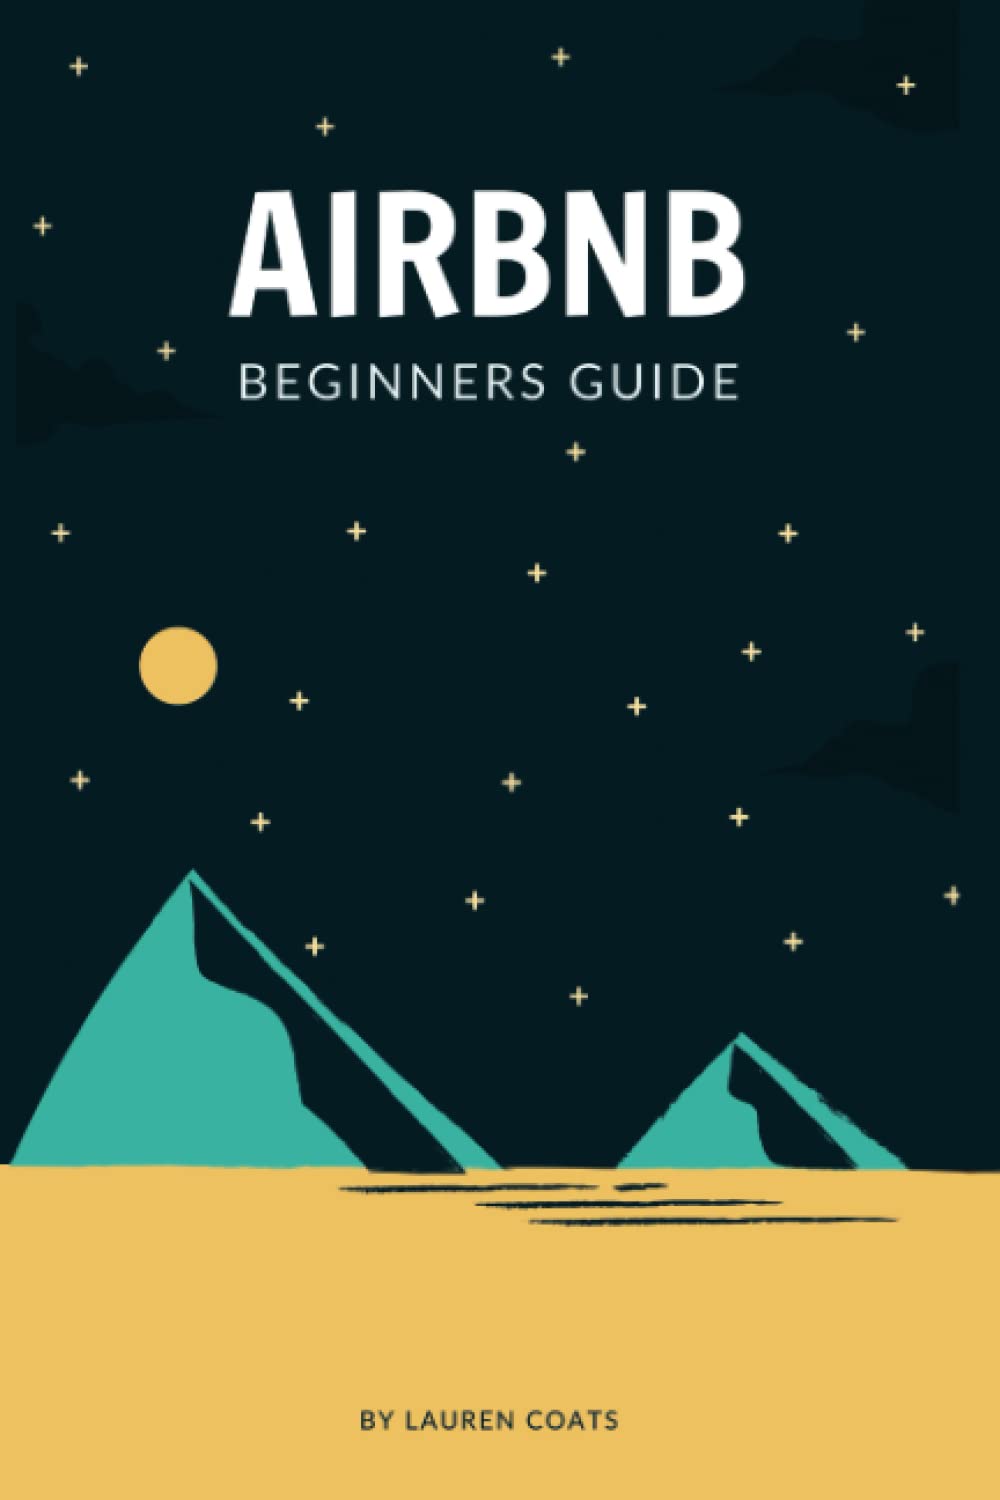 Airbnb Beginners Guide by Lauren Coats